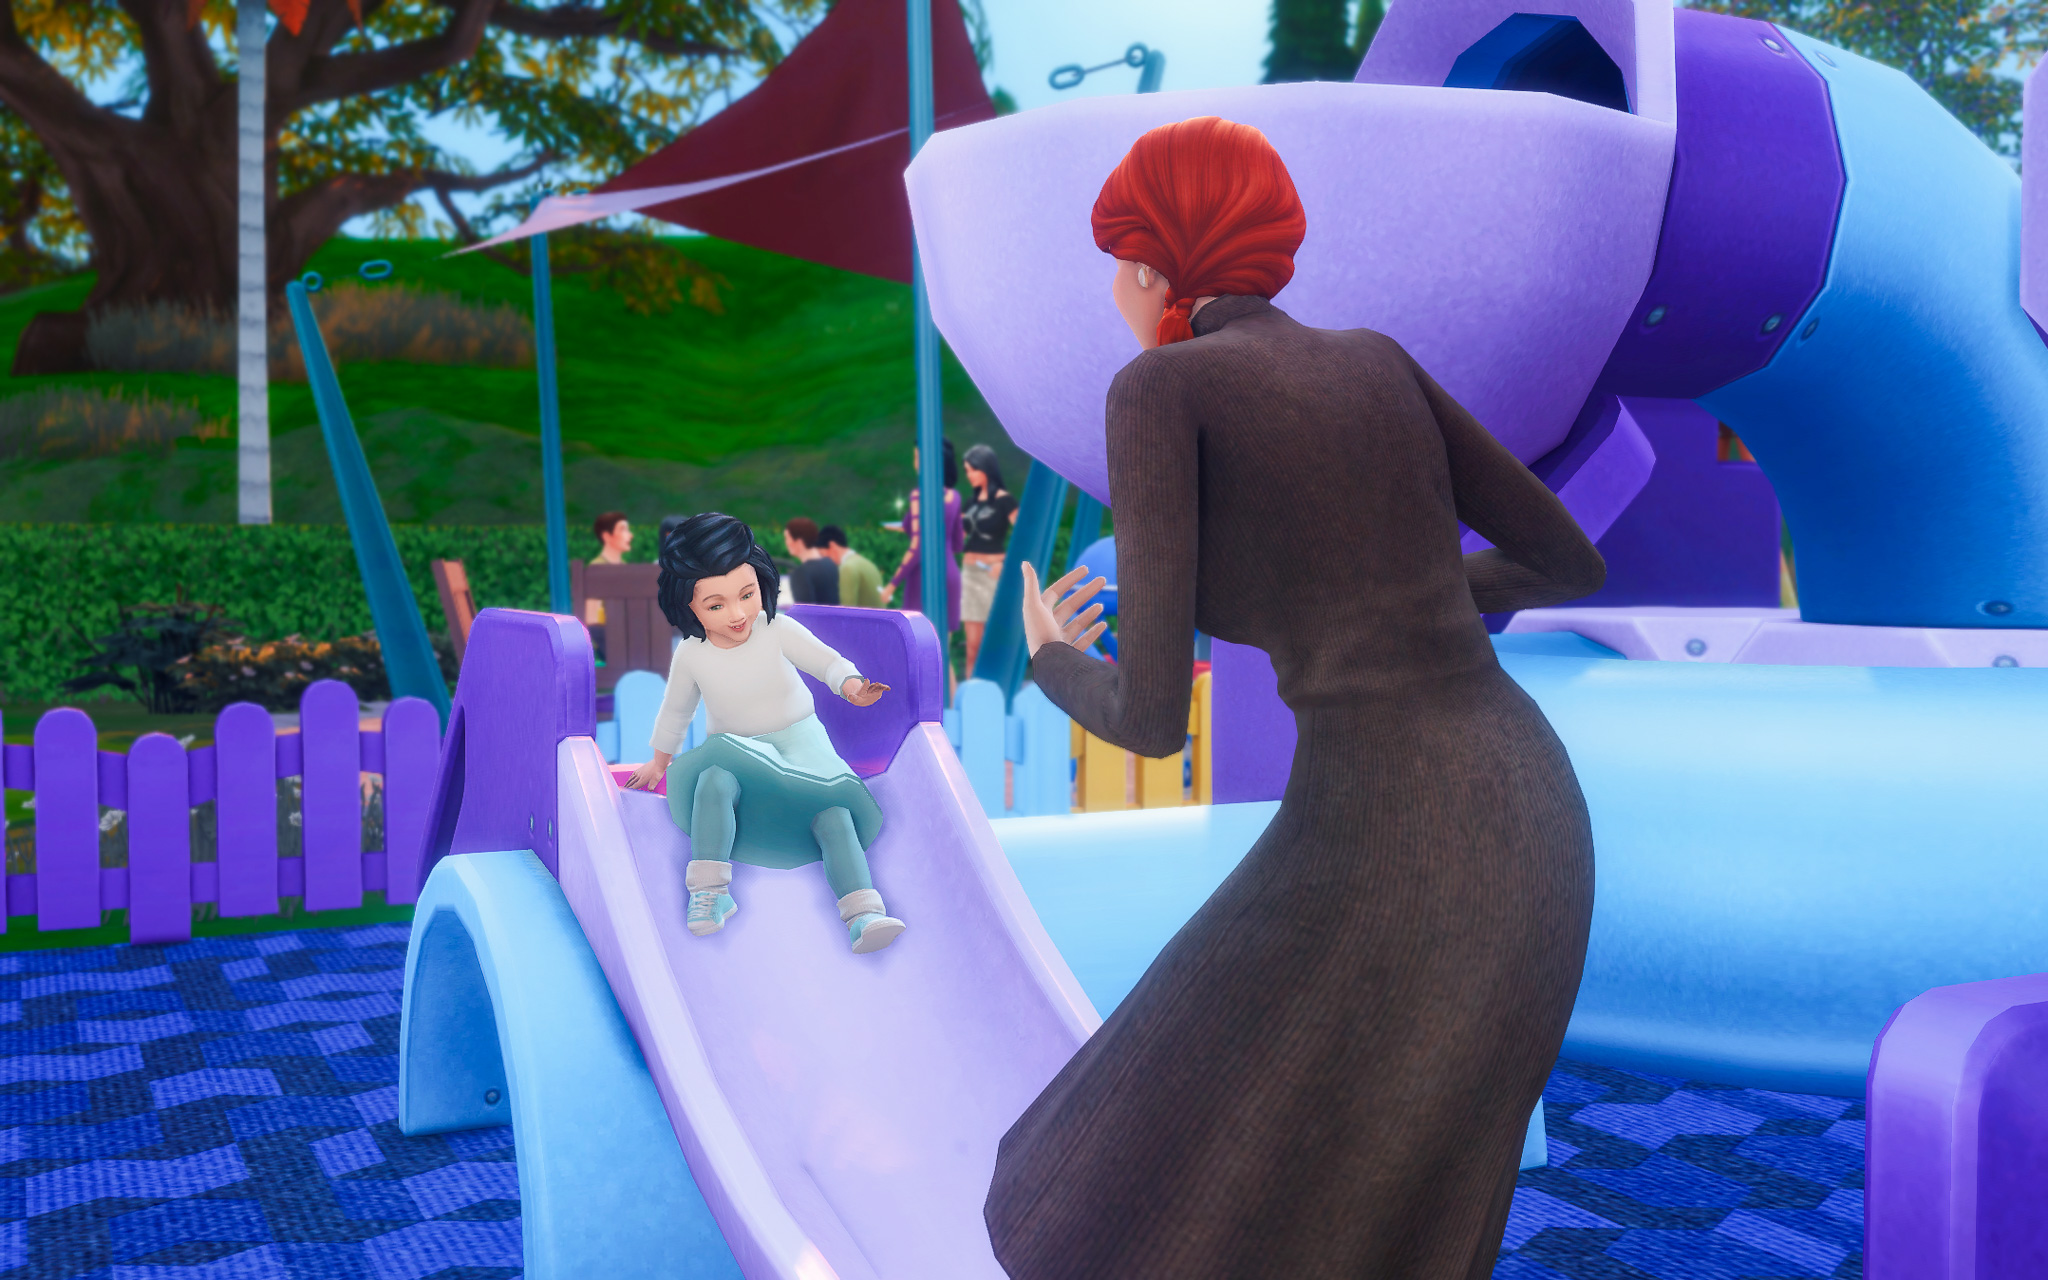 Adelise played with Ennik on a slide.